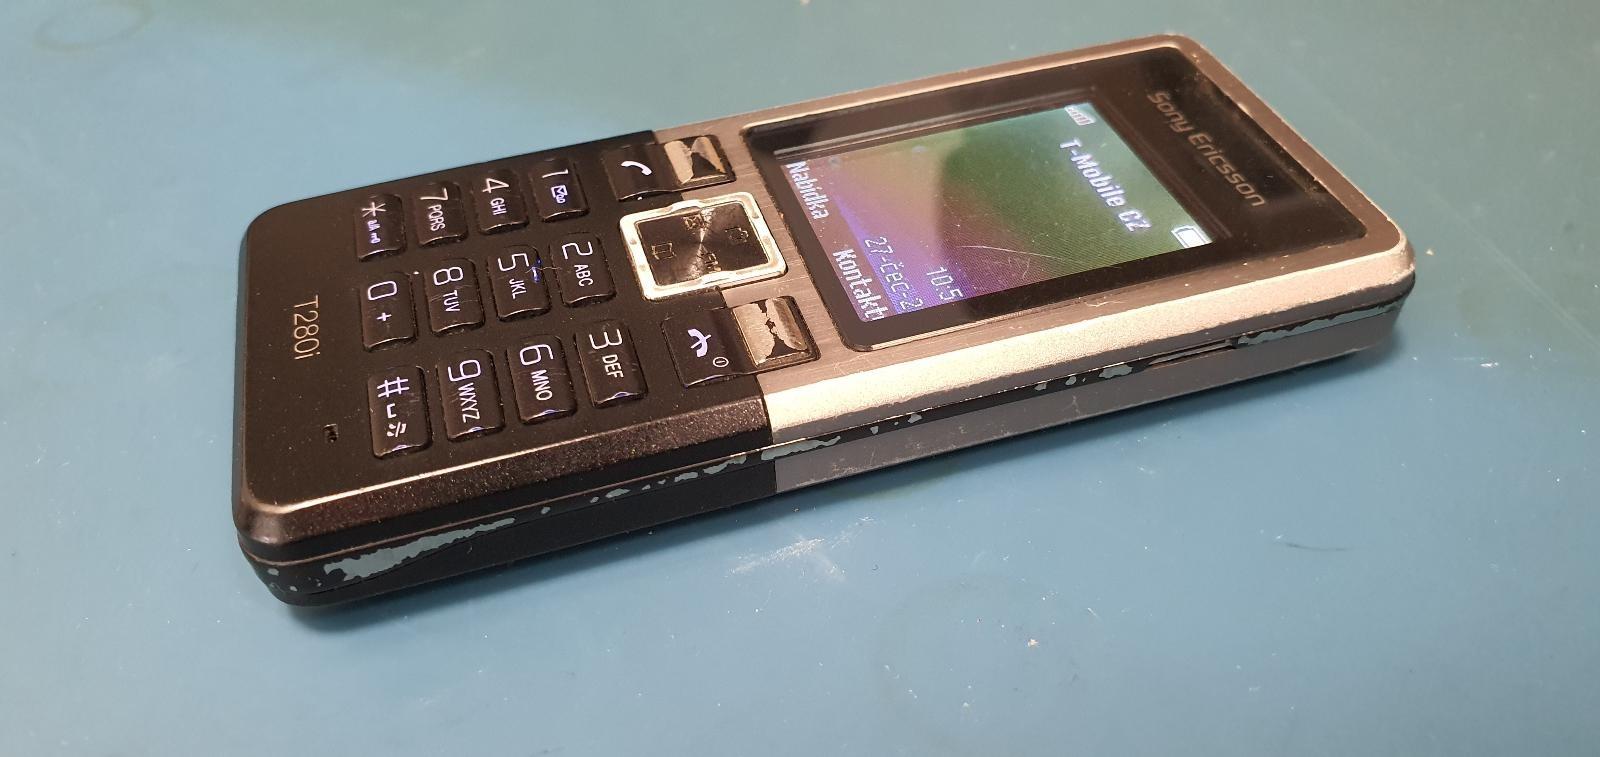 Tlačítkový Mobilní telefon Sony Ericsson T280i  RARITA  - Mobily a chytrá elektronika